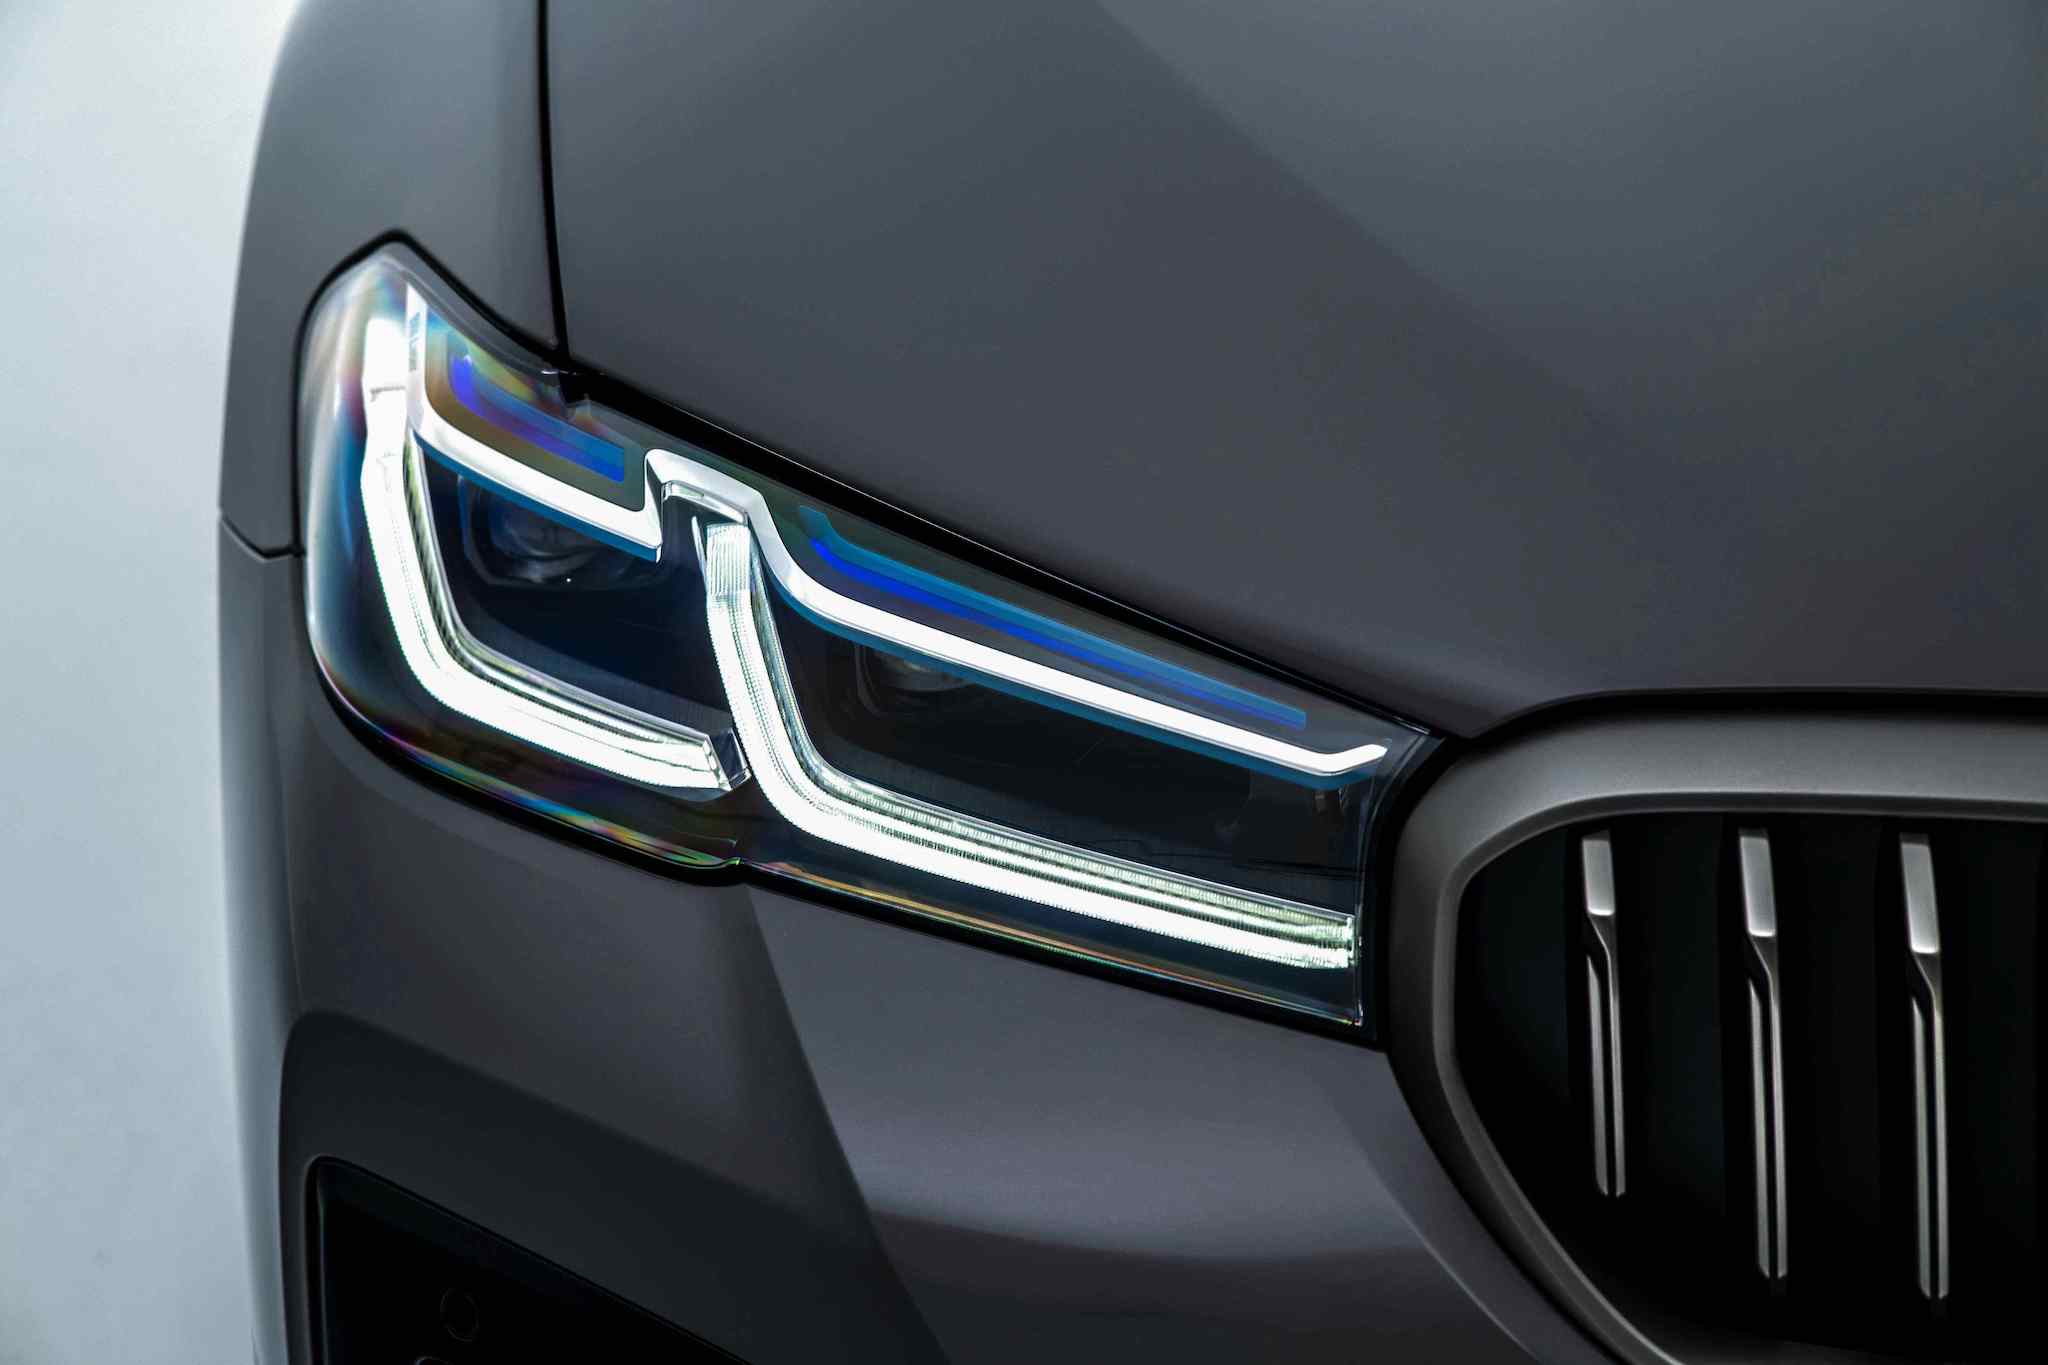 BMW M550i 標準配備全新設計的湛藍色智慧雷射頭燈(含Glare-free光型變化功能)。